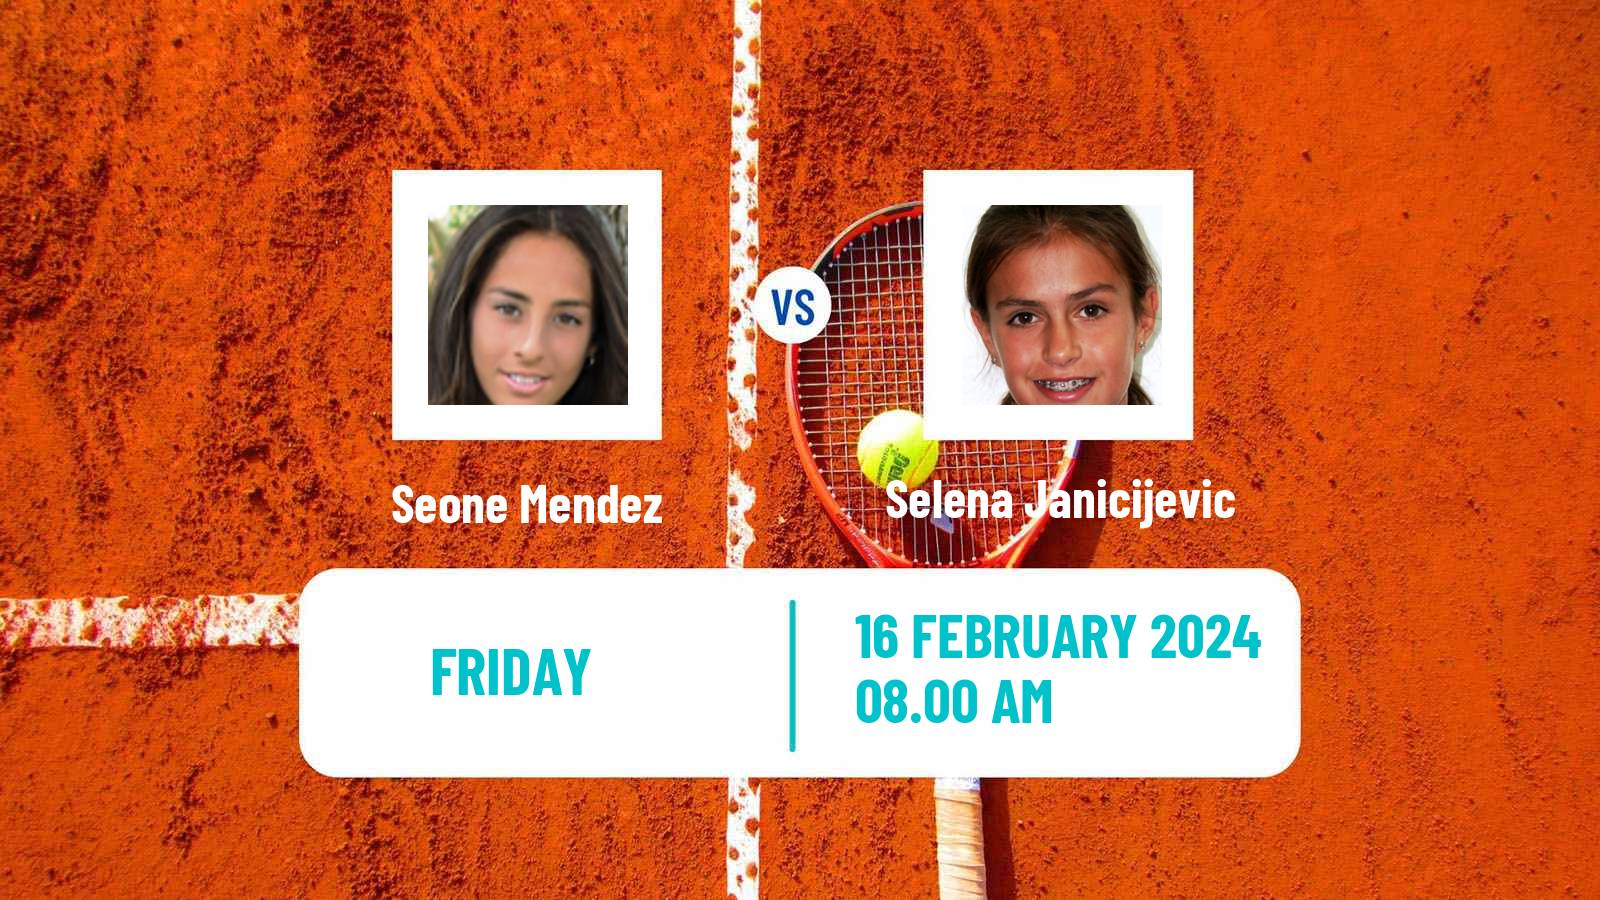 Tennis ITF W35 Antalya 3 Women Seone Mendez - Selena Janicijevic